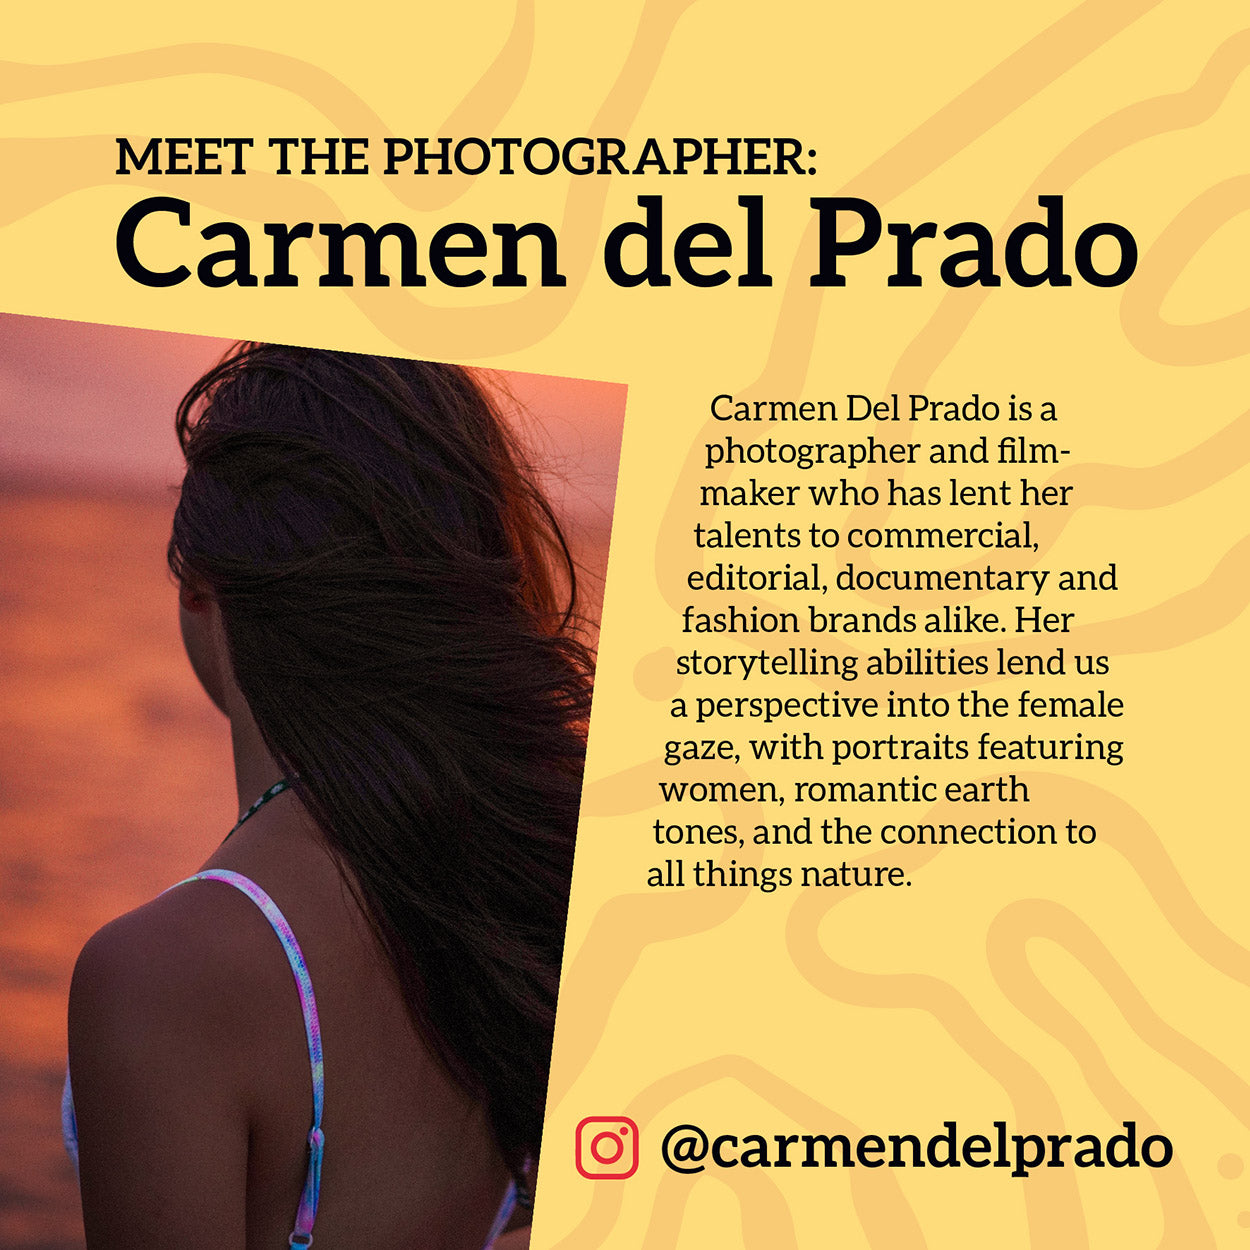 Carmen del Prado Dumaguete city photographer Art Craft Book Gentle People by Pinspired Art Souvenirs